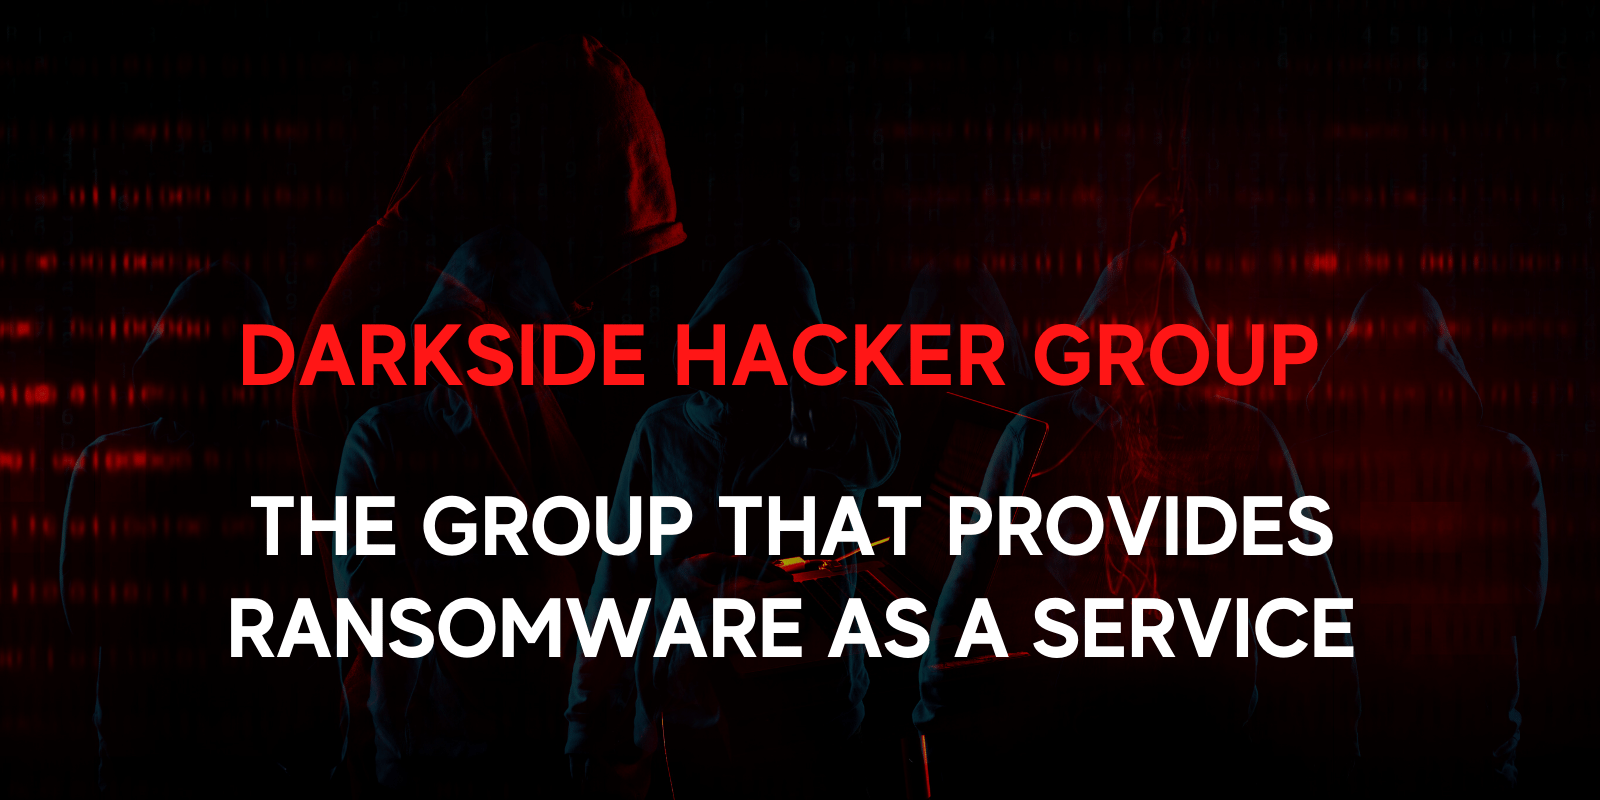 Darkside hacker group